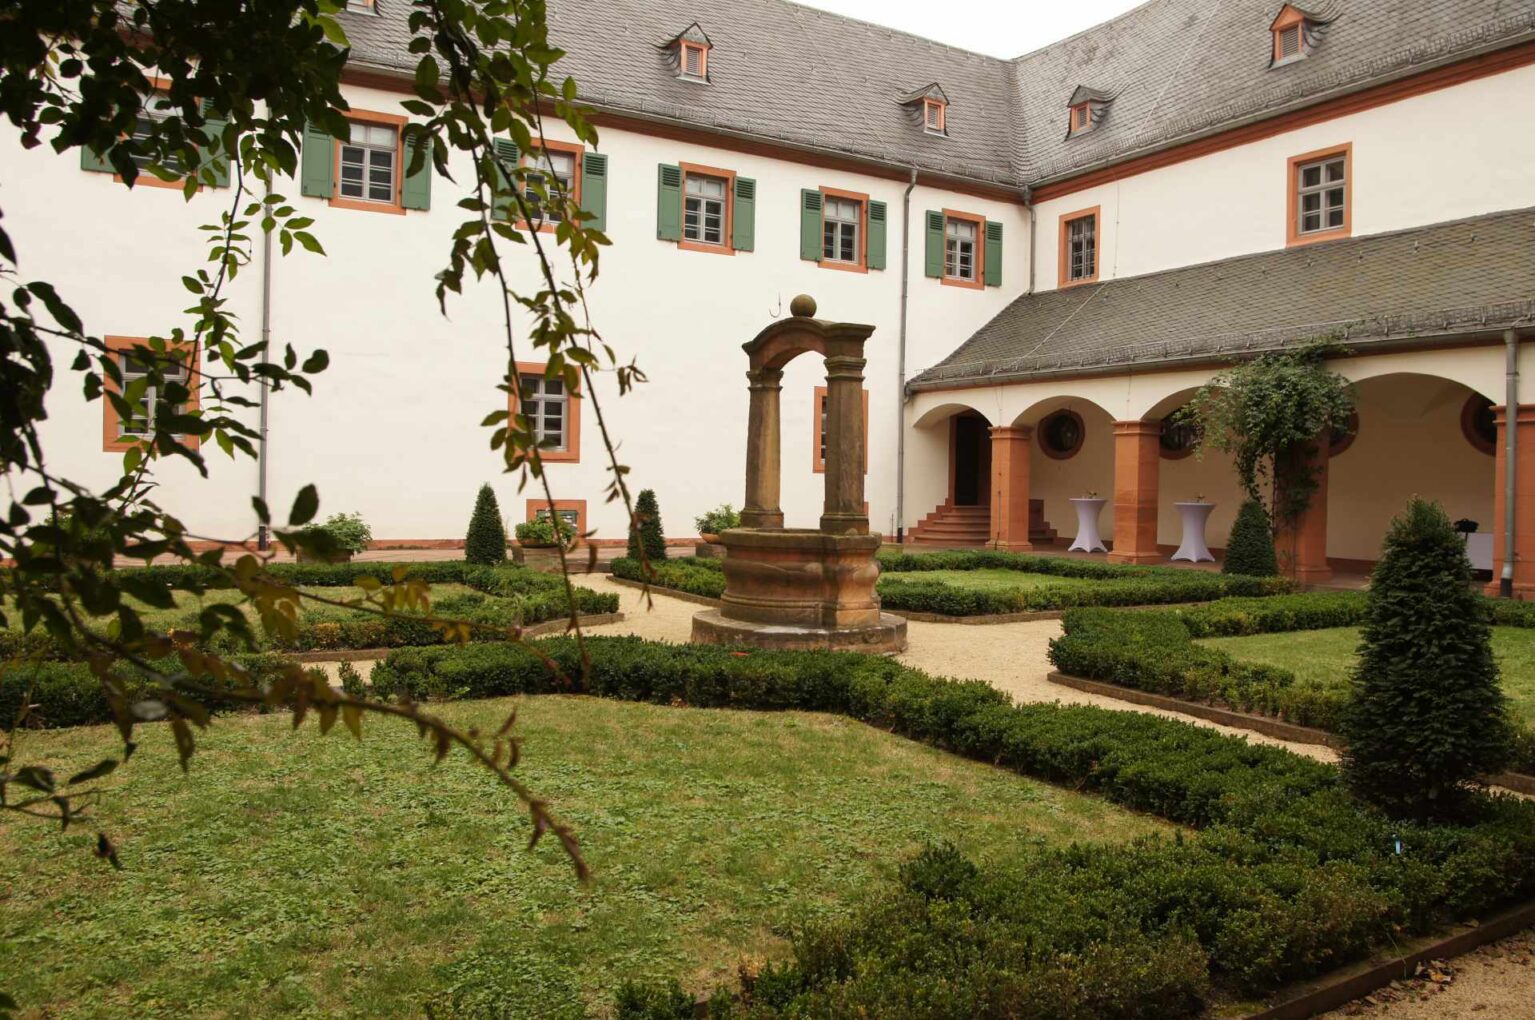 Cloister garden of Seligenstadt Abbey